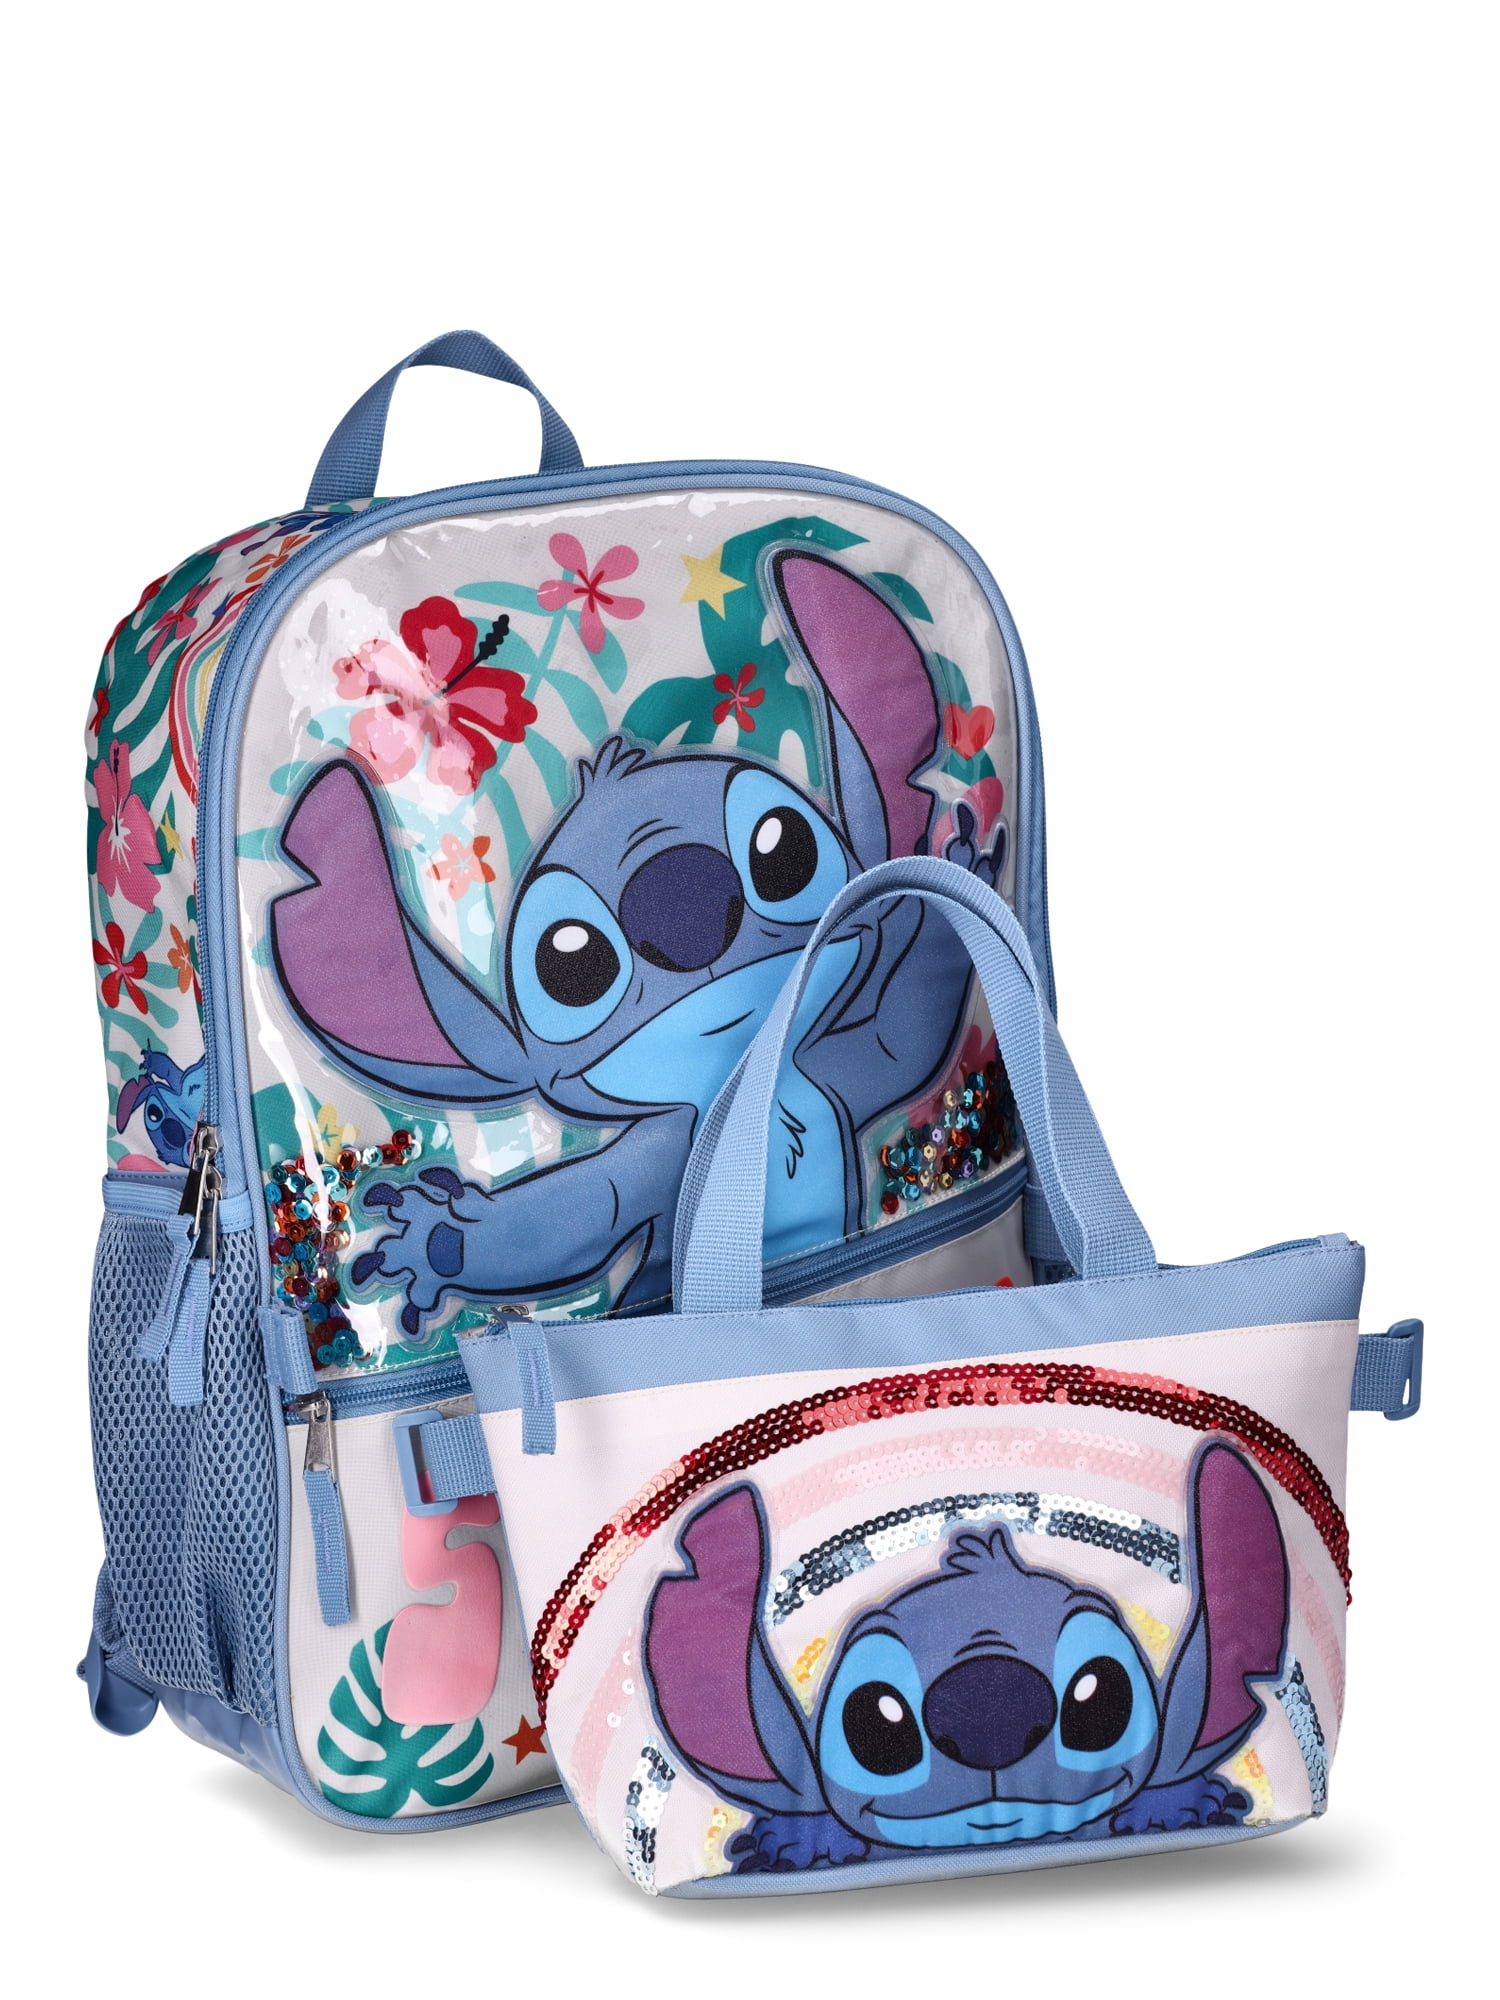 Disney Store Stitch Gift Bag, Small